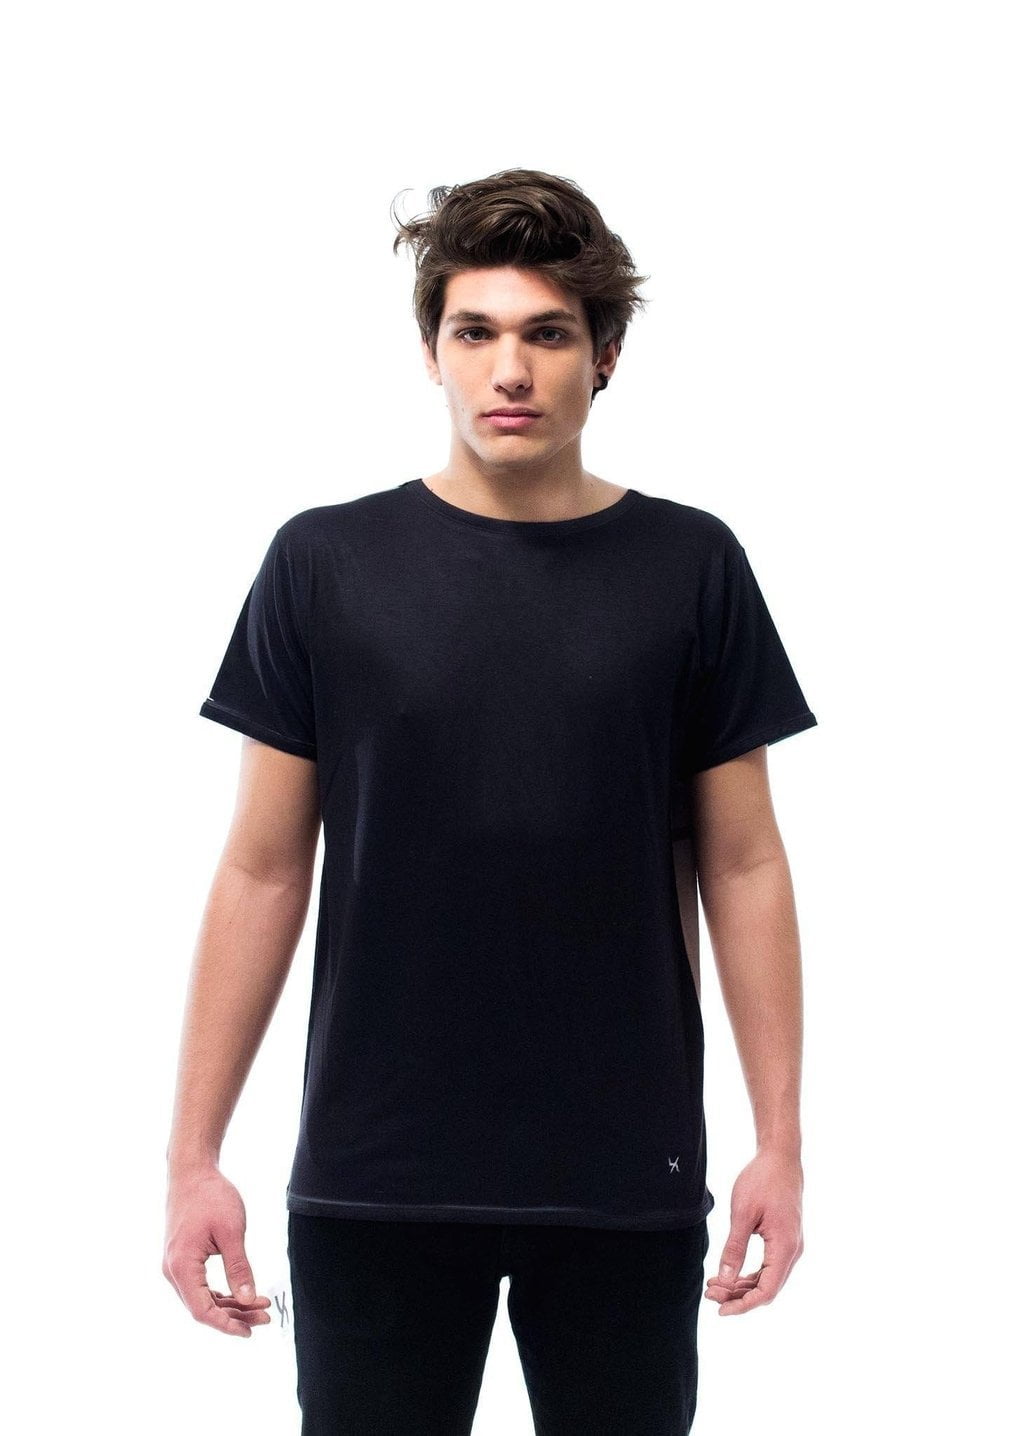 Duman - Uztzu Clothing - Shop Super 4 in 1 T-shirts, Pants and hoodies online!